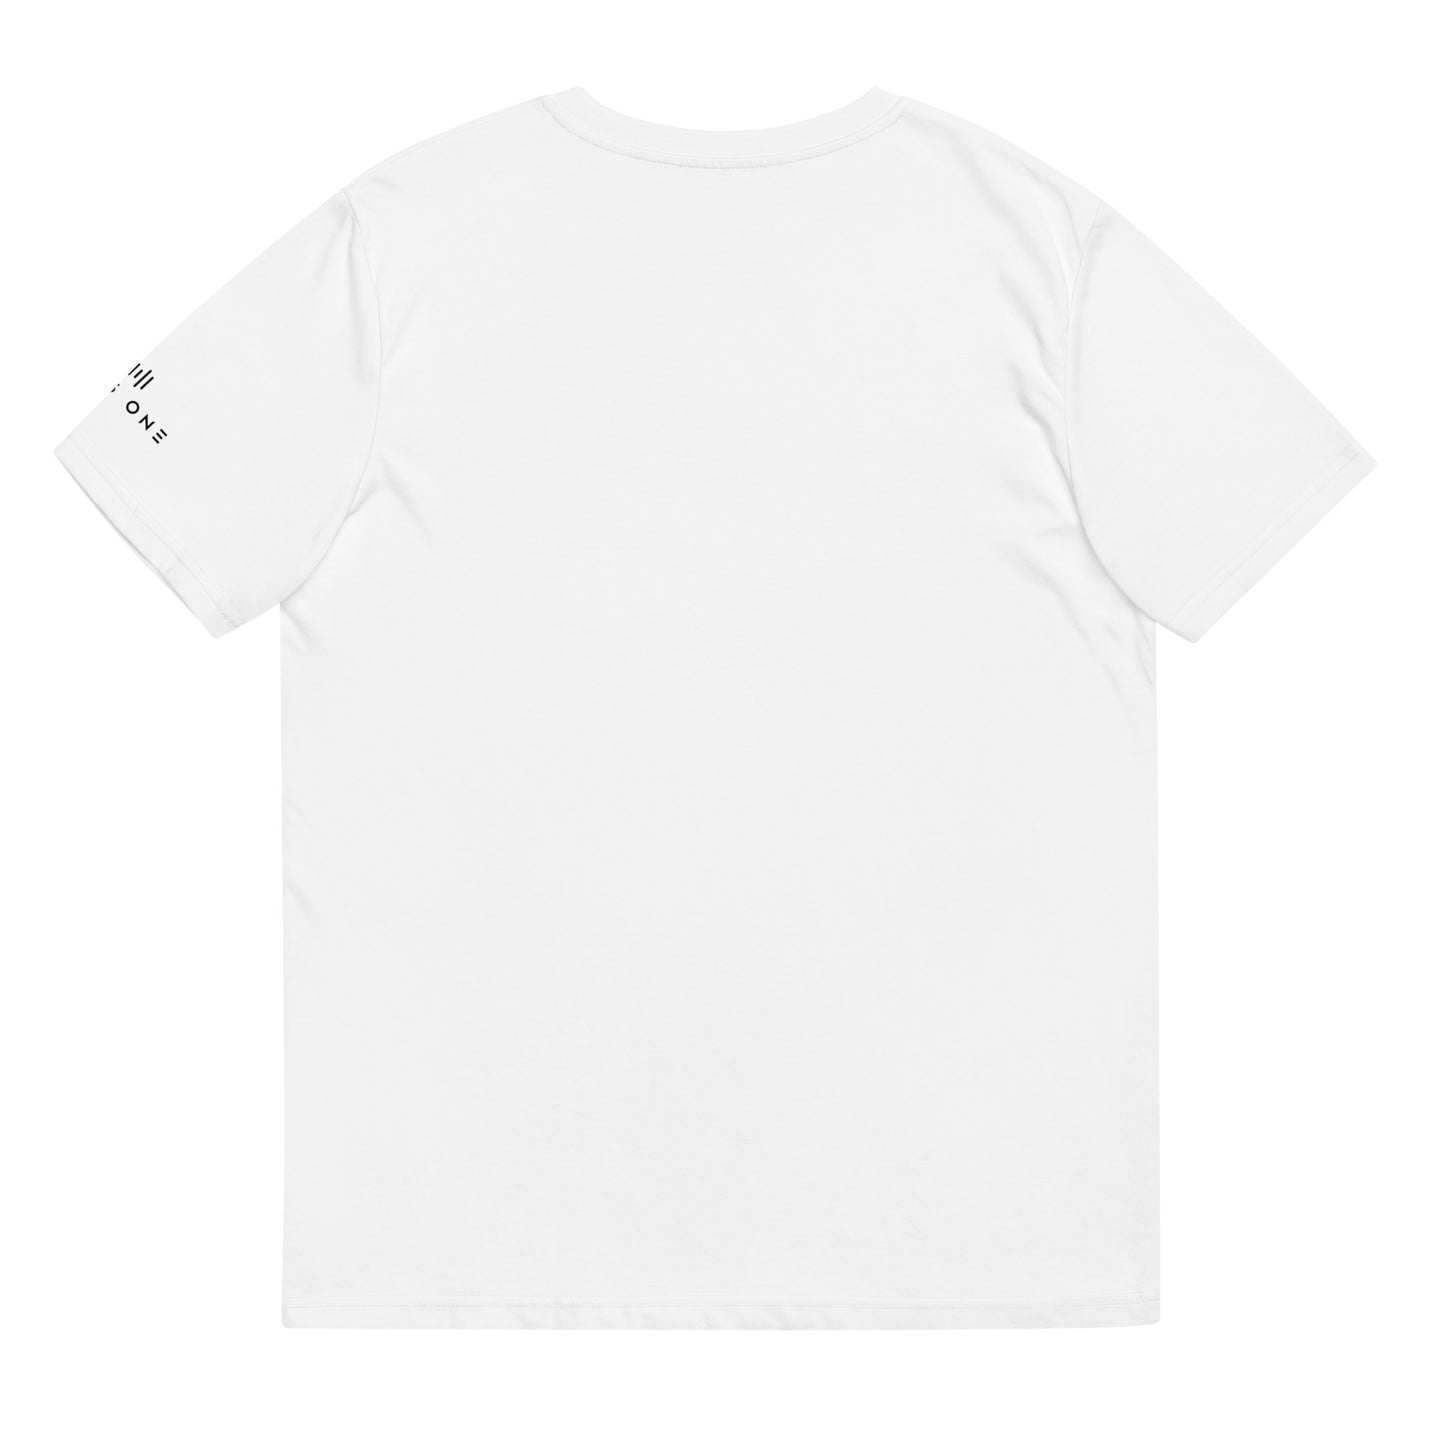 RAW (v1) Unisex organic cotton t-shirt (Black Text)